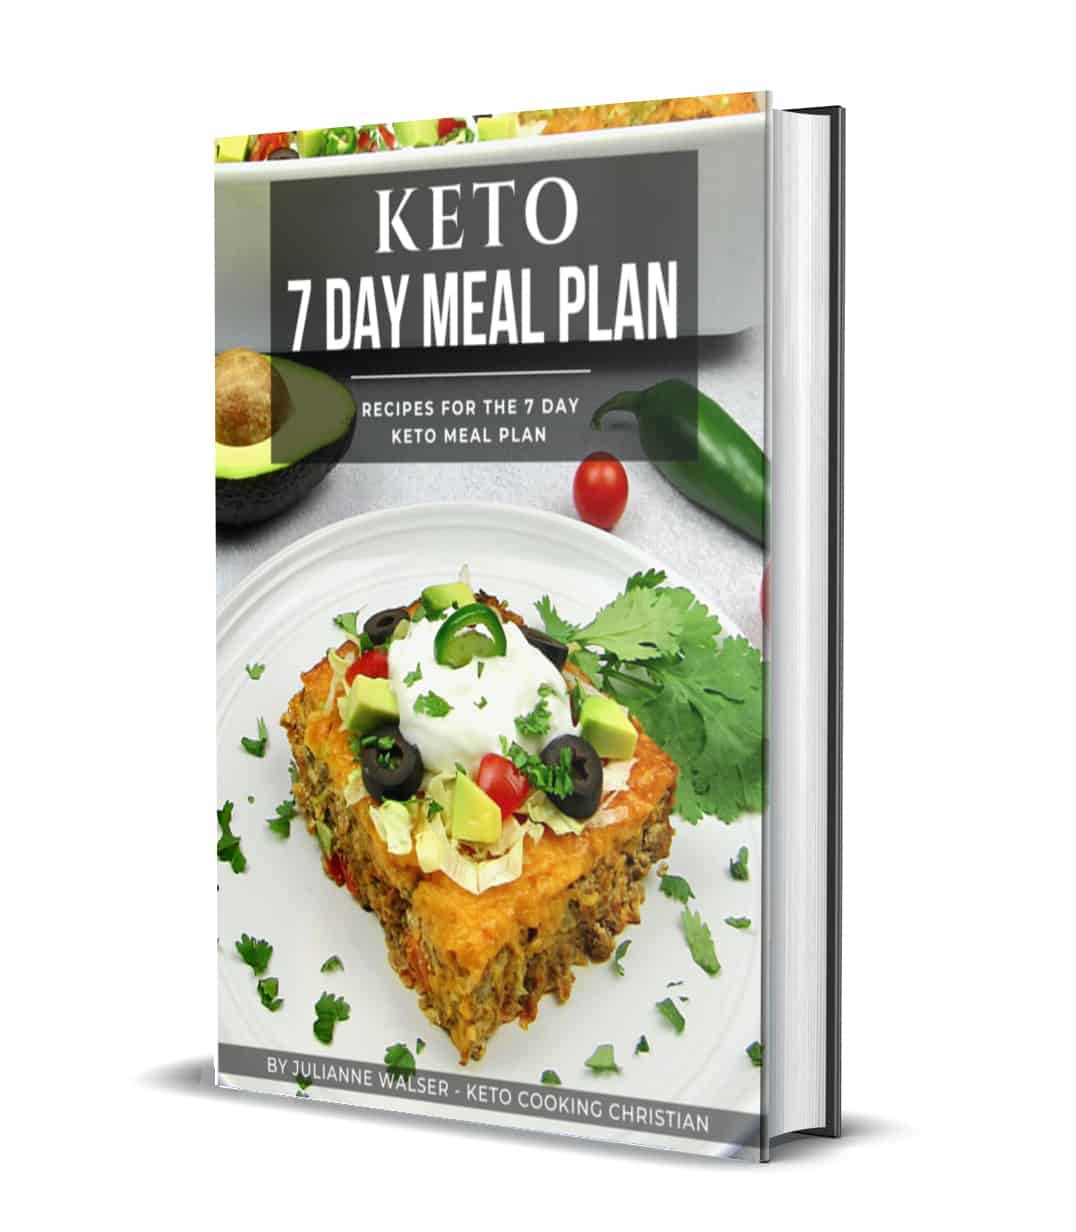 7 Day Keto Meal Plan Recipes e-Book - Keto Cooking Christian